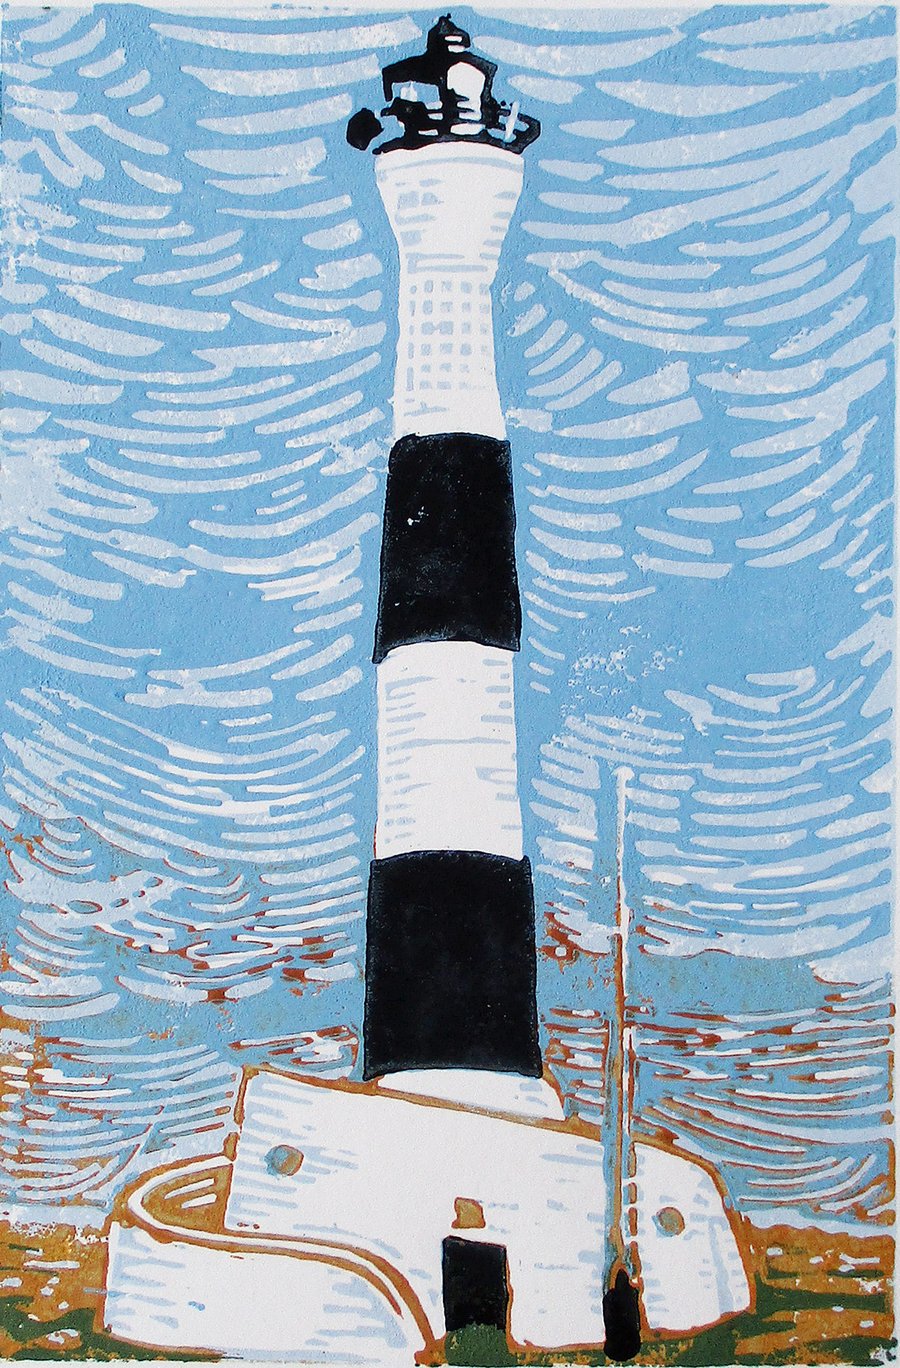 Dungeness New Lighthouse, Kent - Original Hand Pressed Linocut Print on Paper